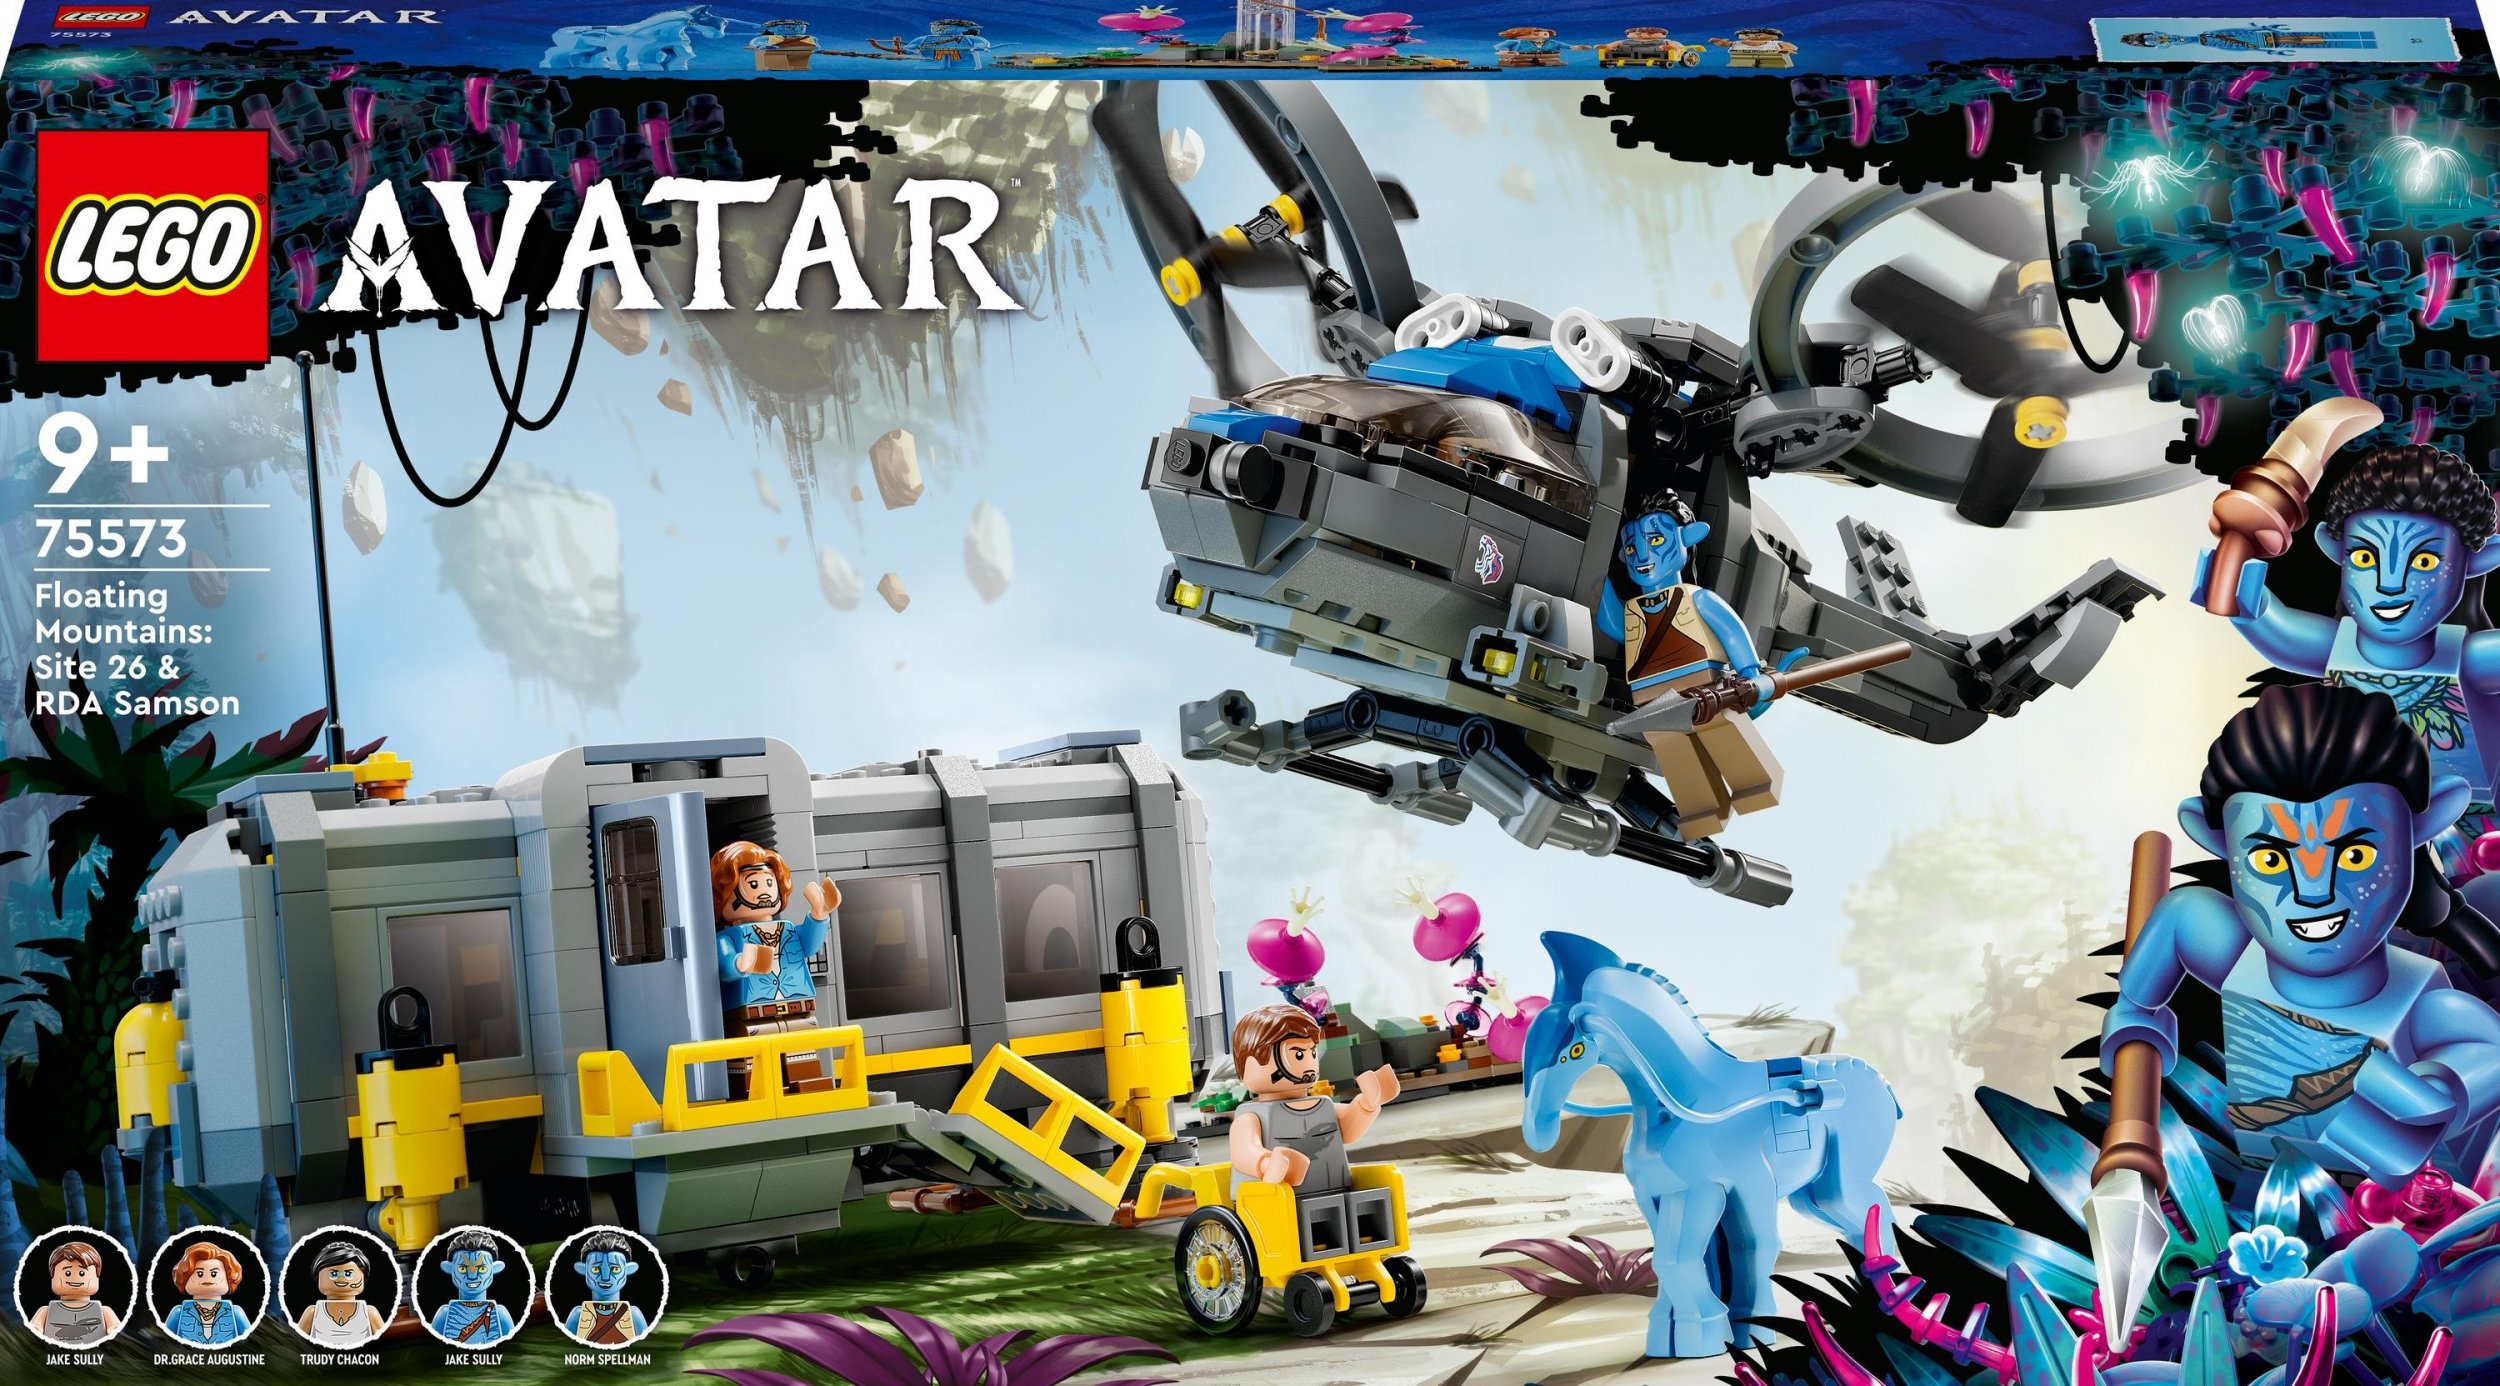 LEGO Avatar Flying Mountains: Stația 26 și Samson ZPZ (75573)